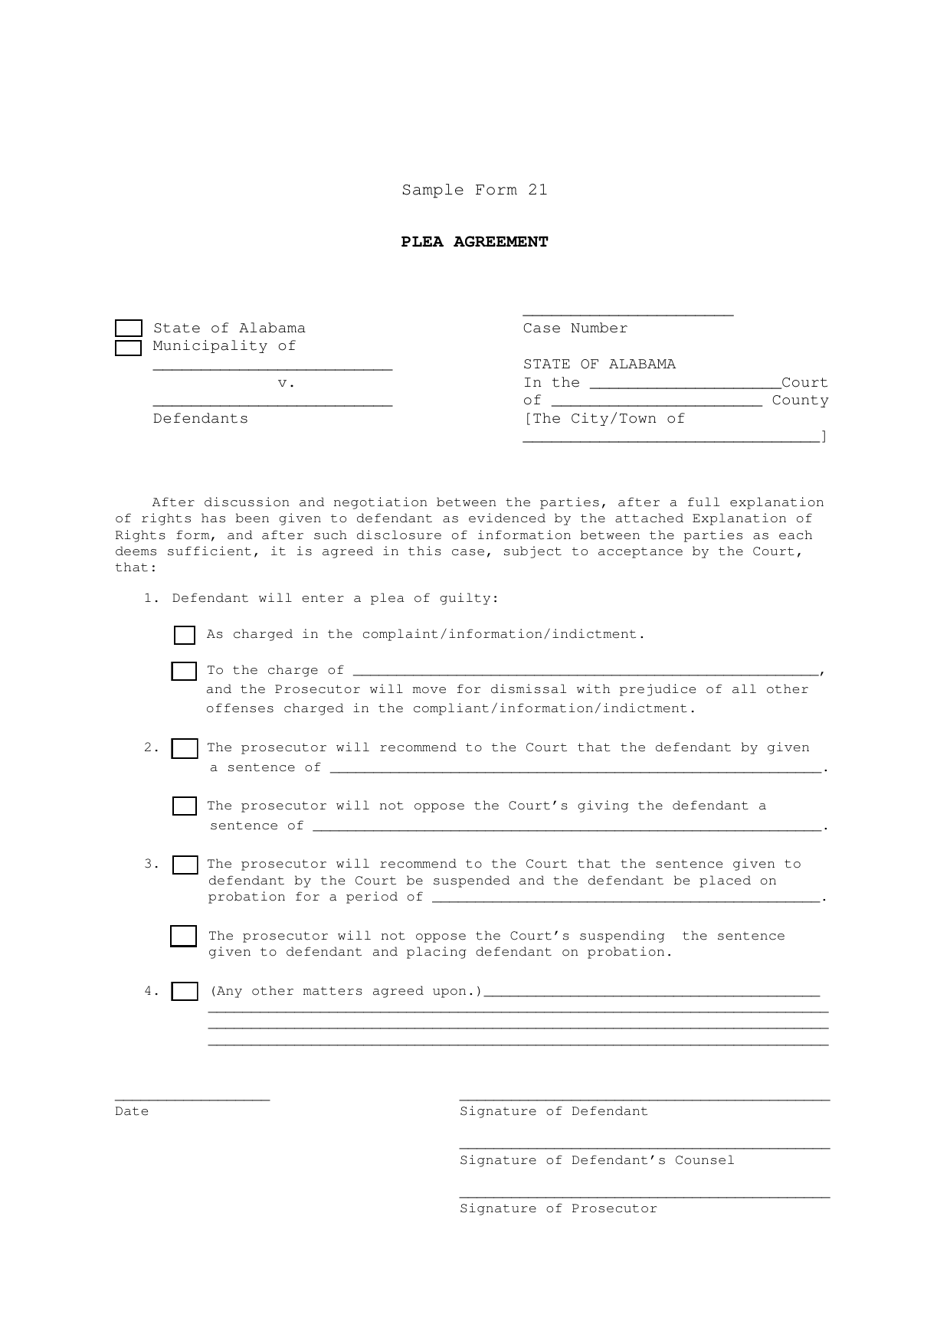 Sample Form 21 Plea Agreement - Alabama, Page 1